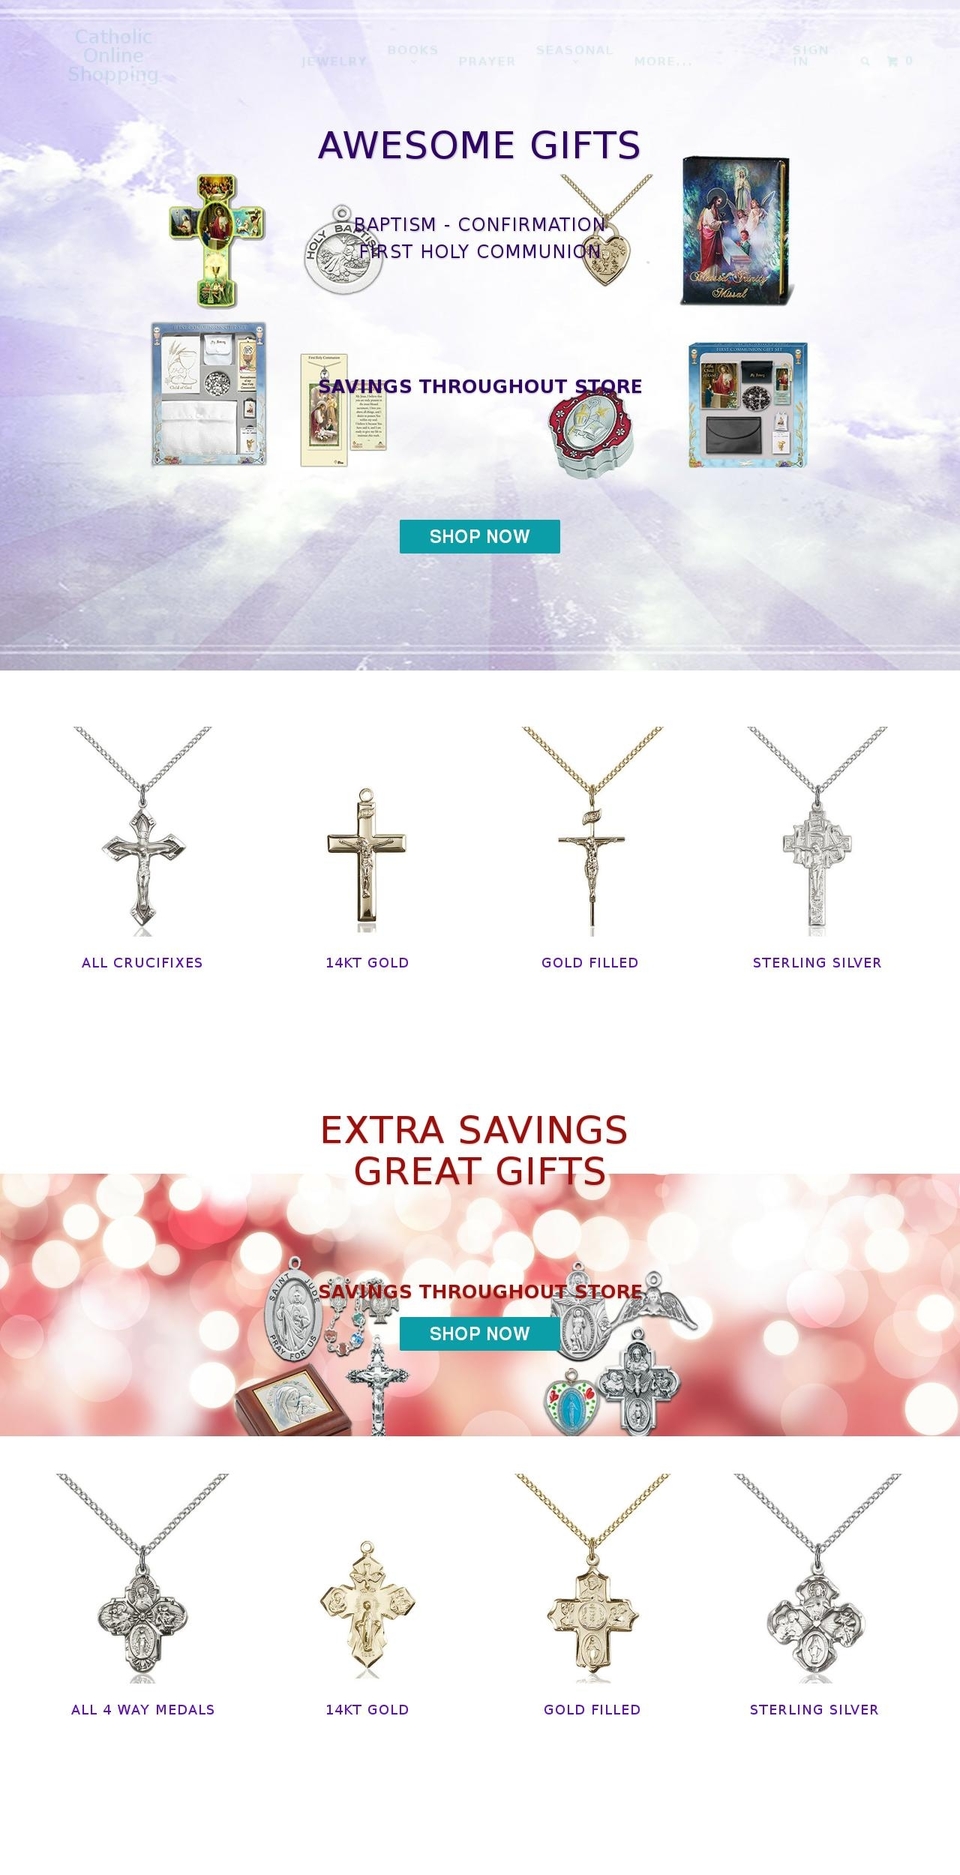 catholiconline.shopping shopify website screenshot